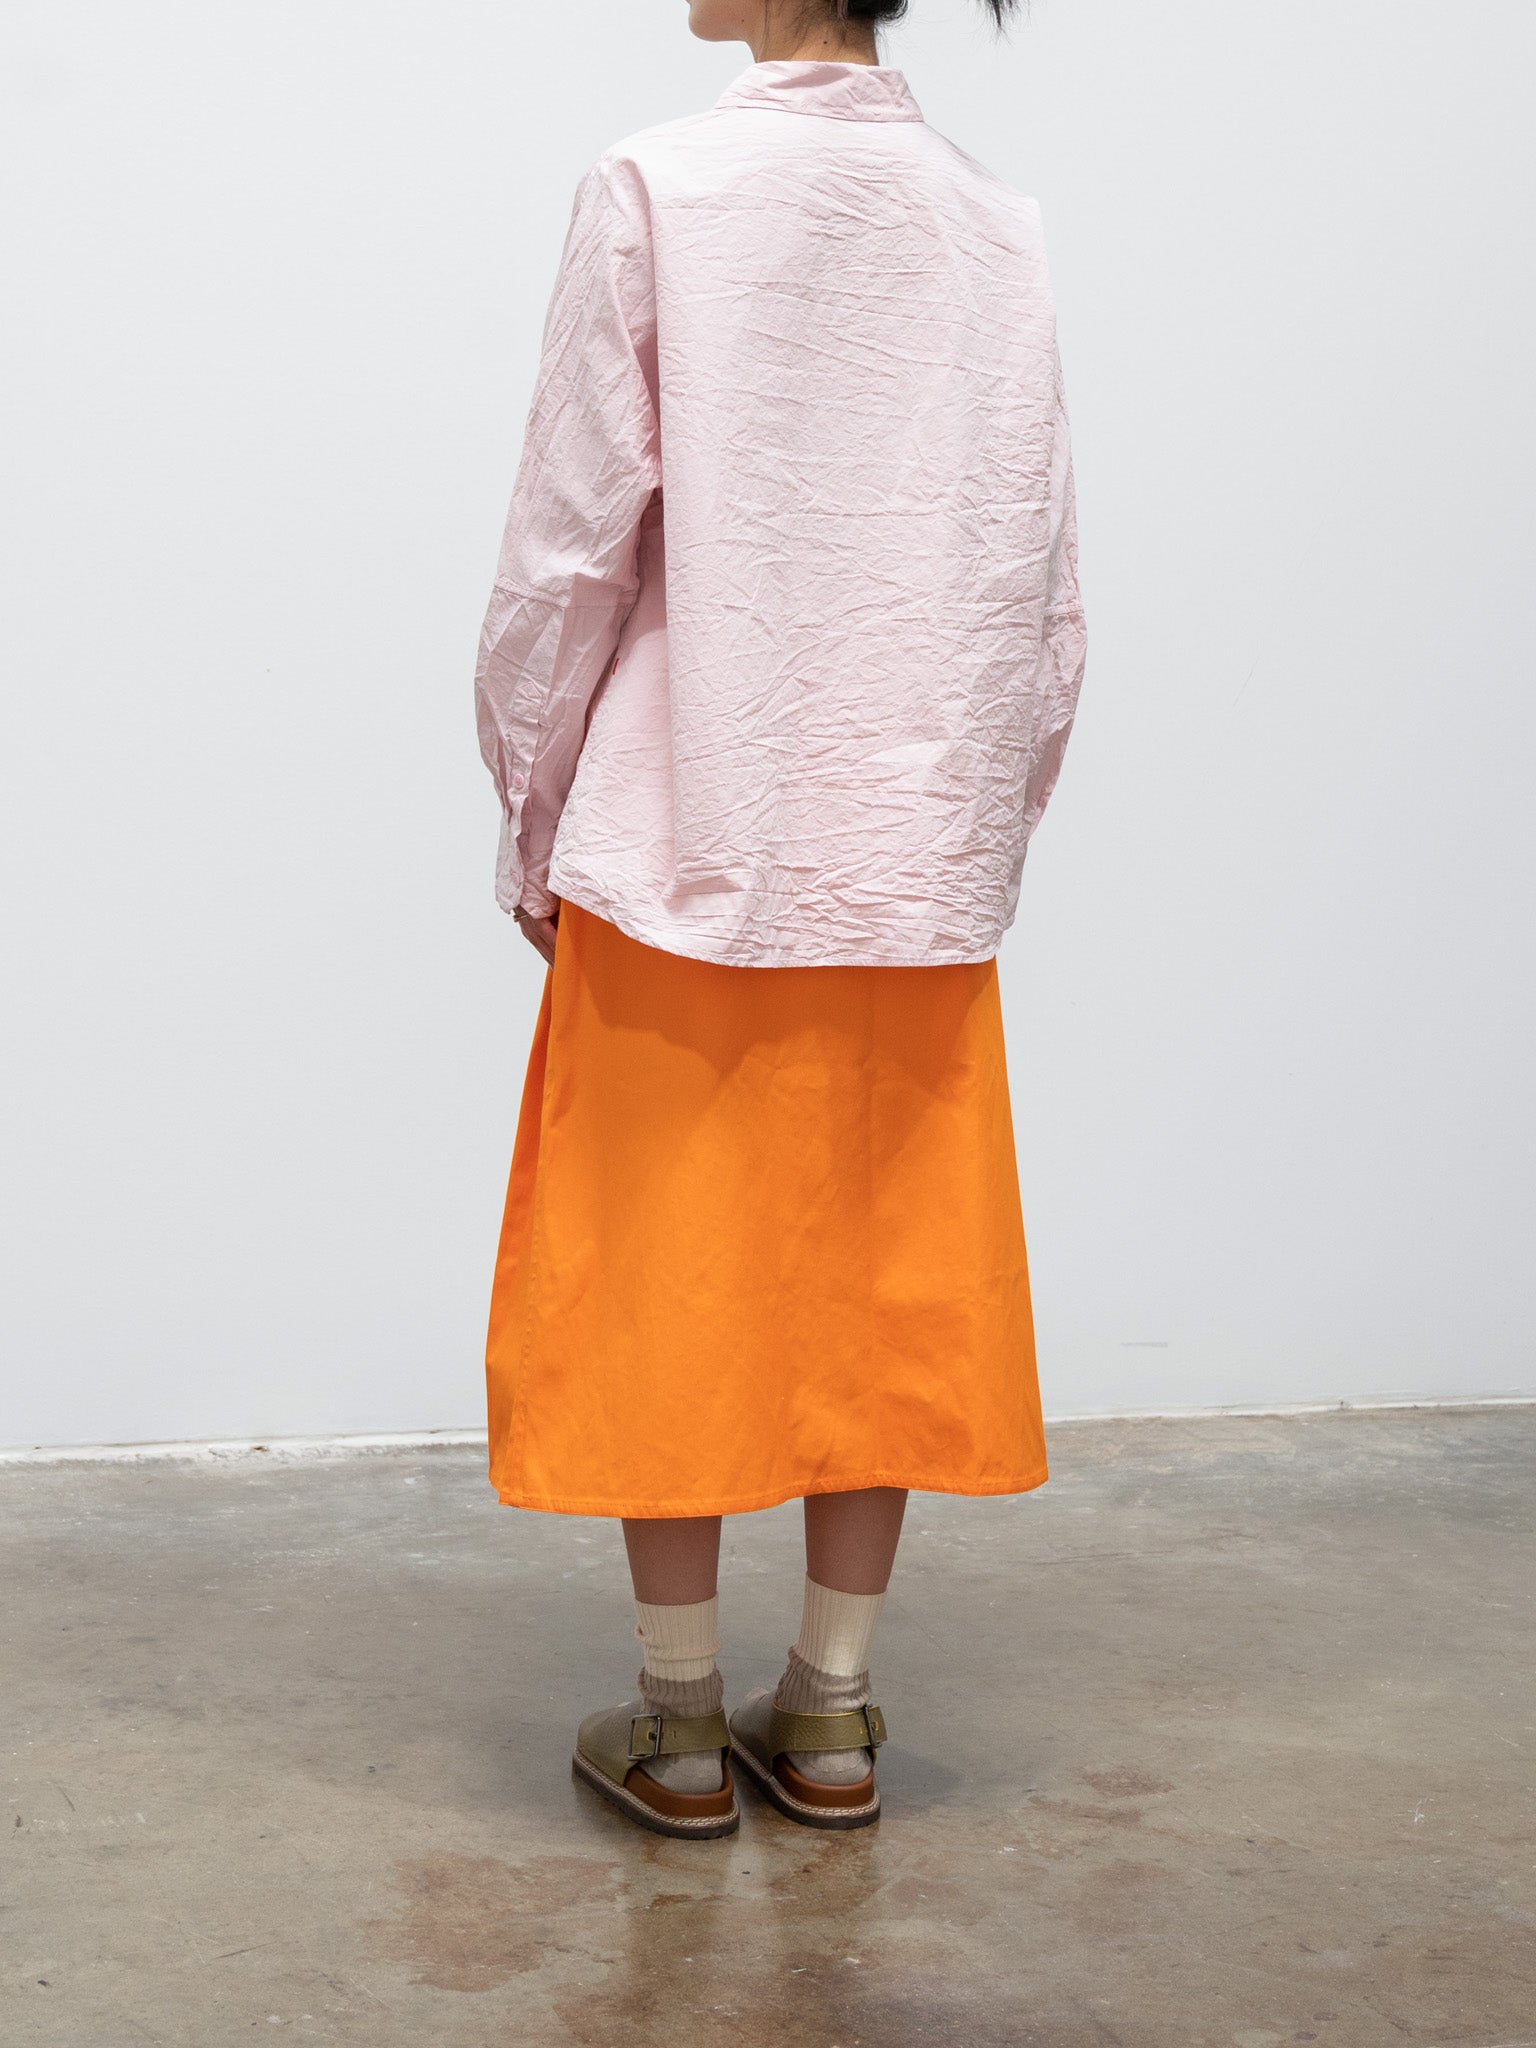 Namu Shop - Casey Casey Waga Shirt Paper Cotton - Pink